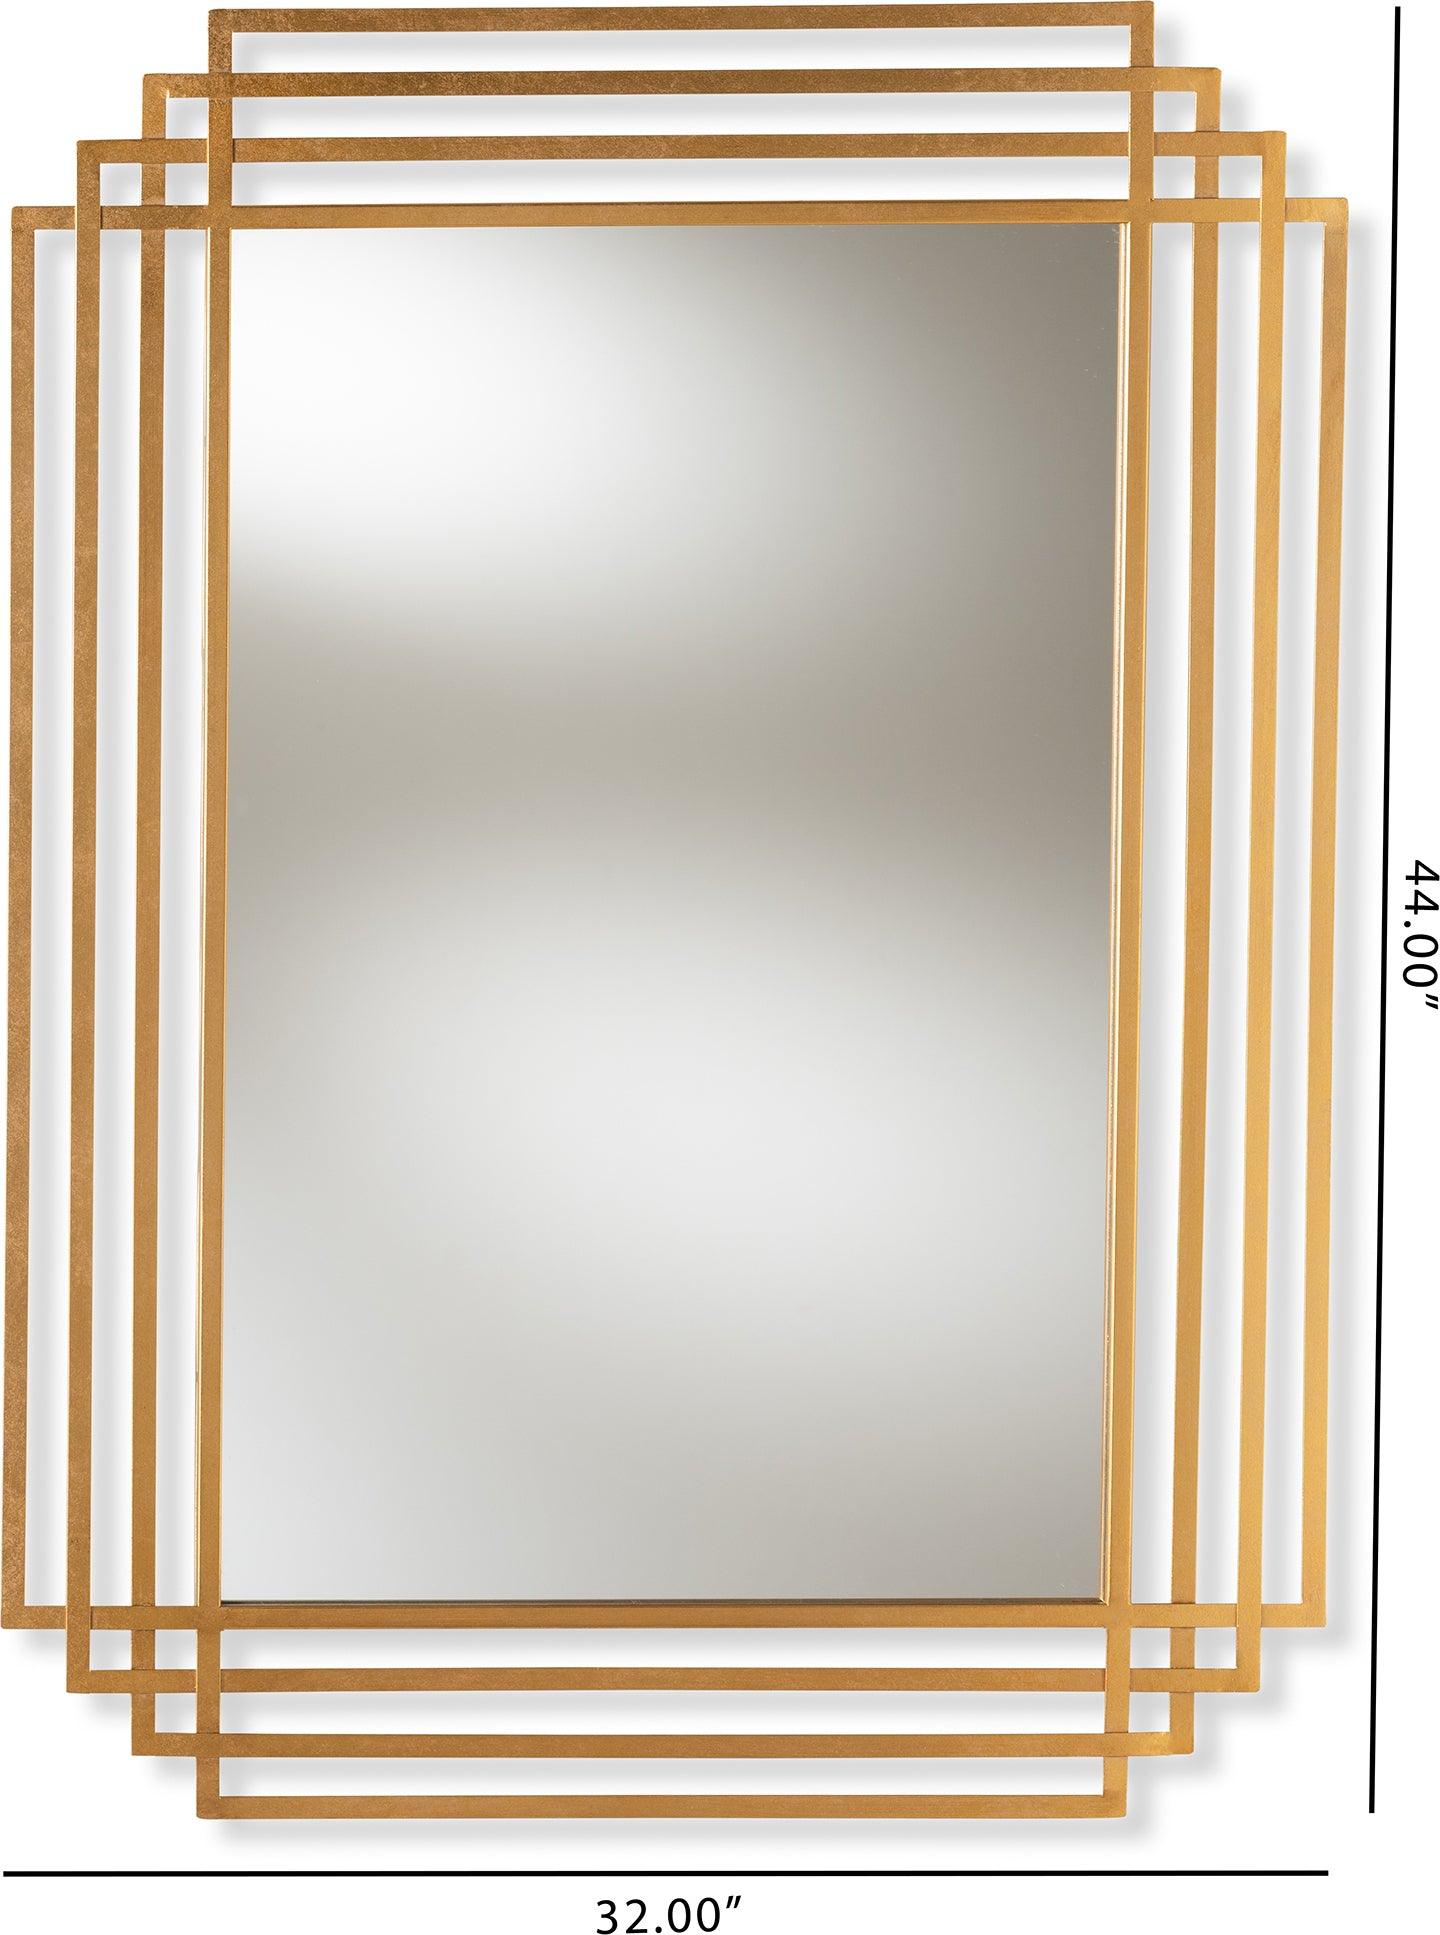 Wholesale Interiors Mirrors - Kalinda Rectangular Accent Wall Mirror Antique Gold